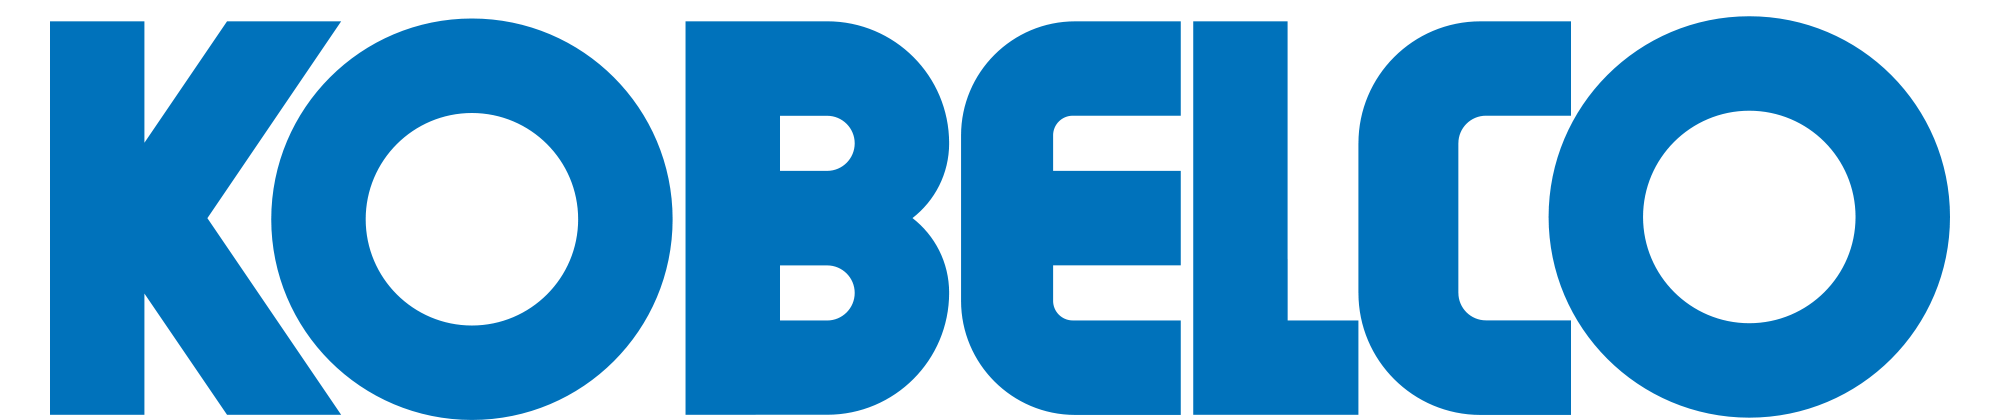 Kobelco_logo